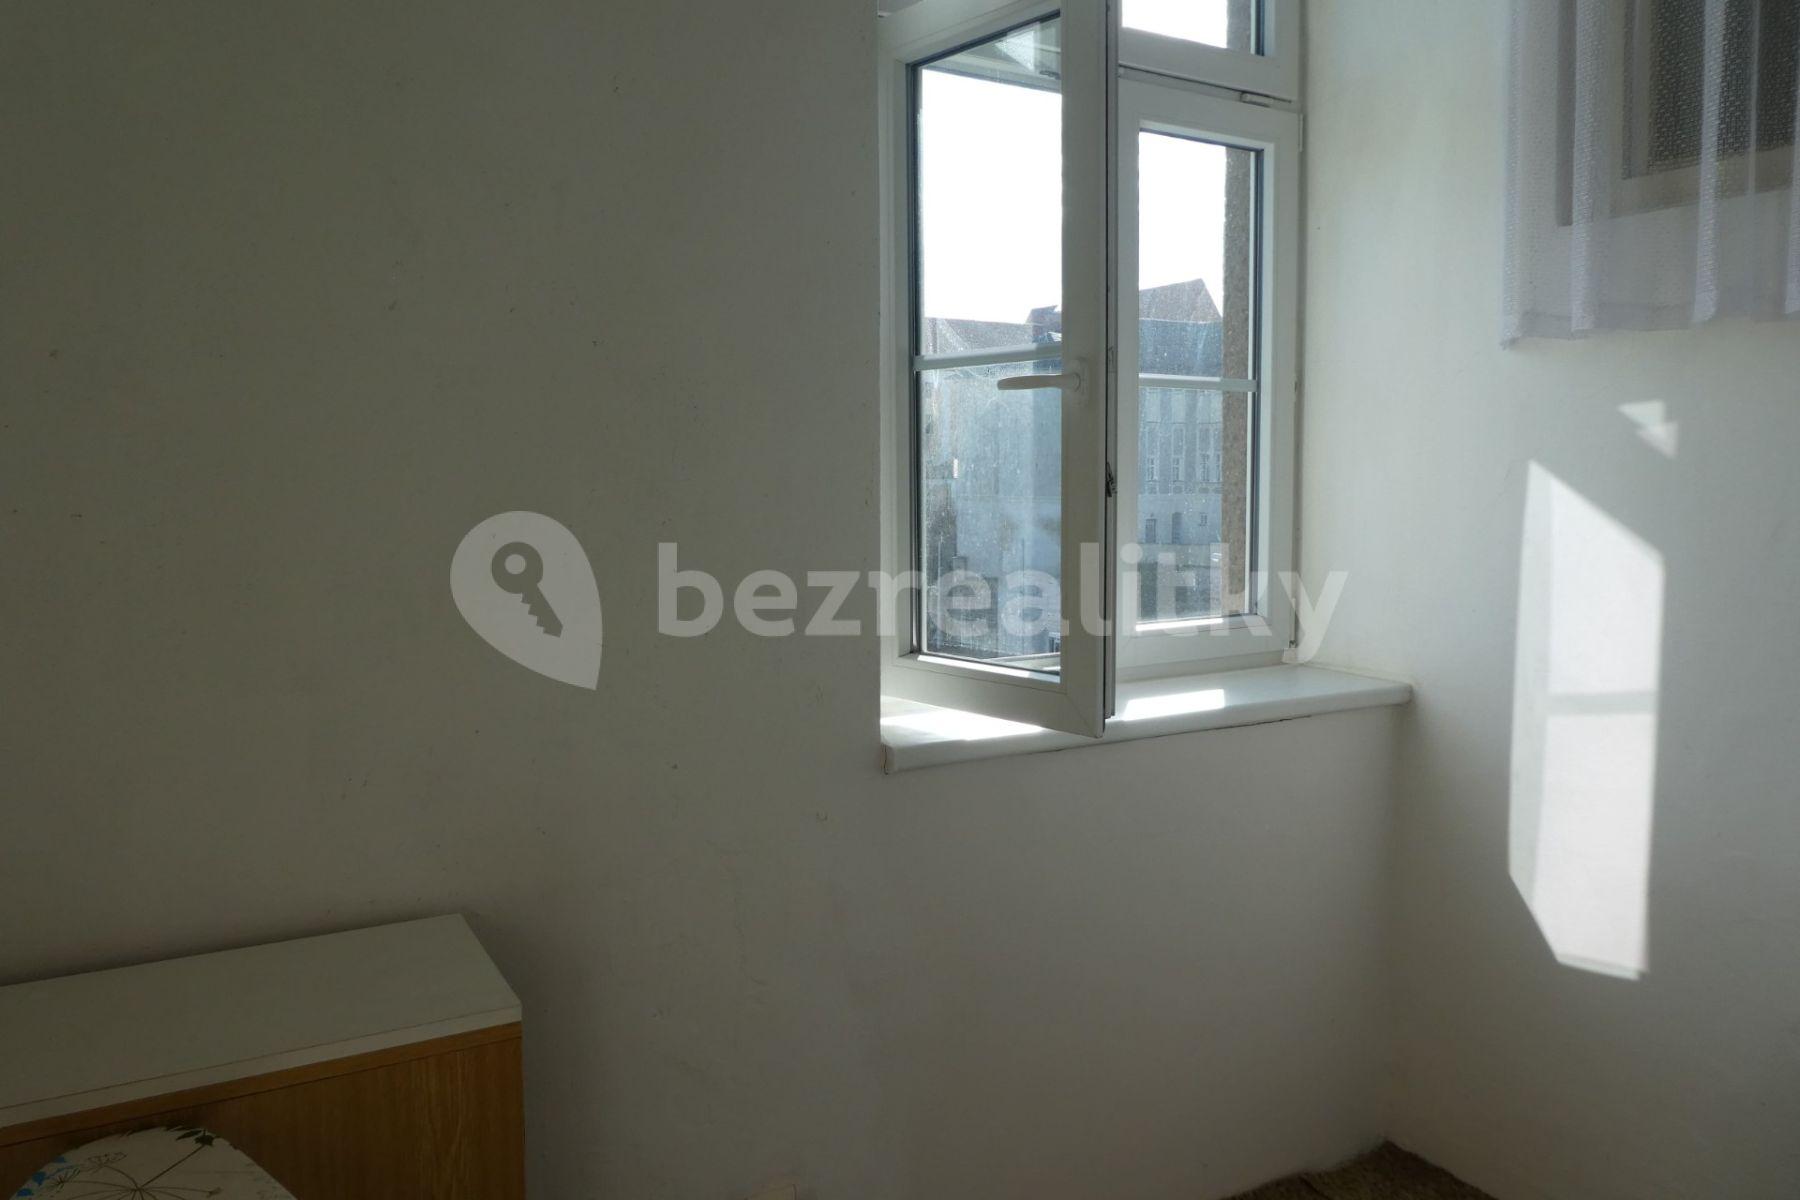 2 bedroom flat to rent, 73 m², Koželužská, Olomouc, Olomoucký Region